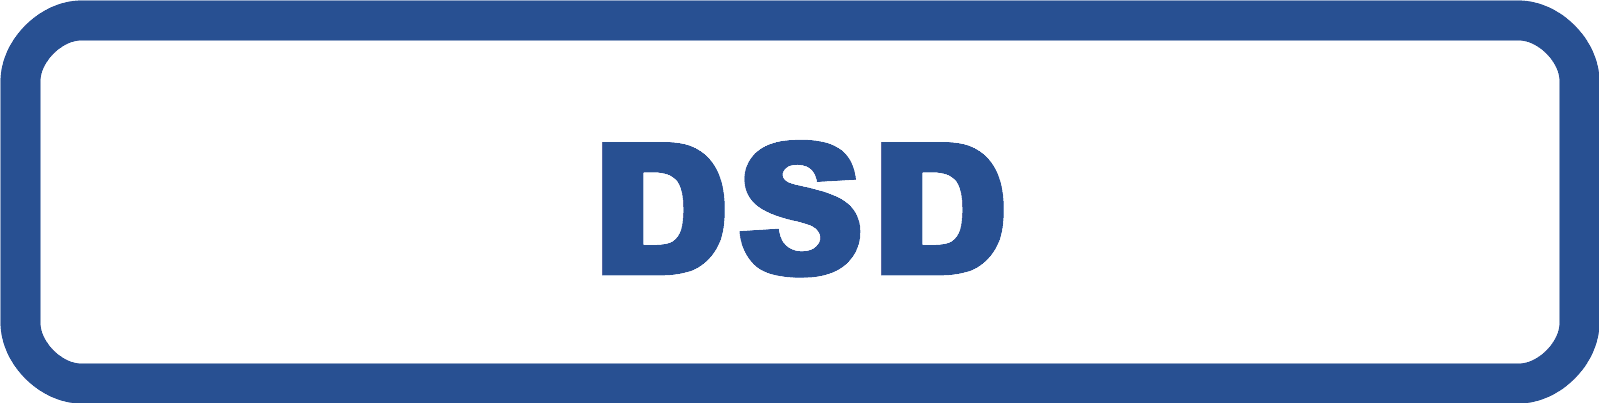 DSD format